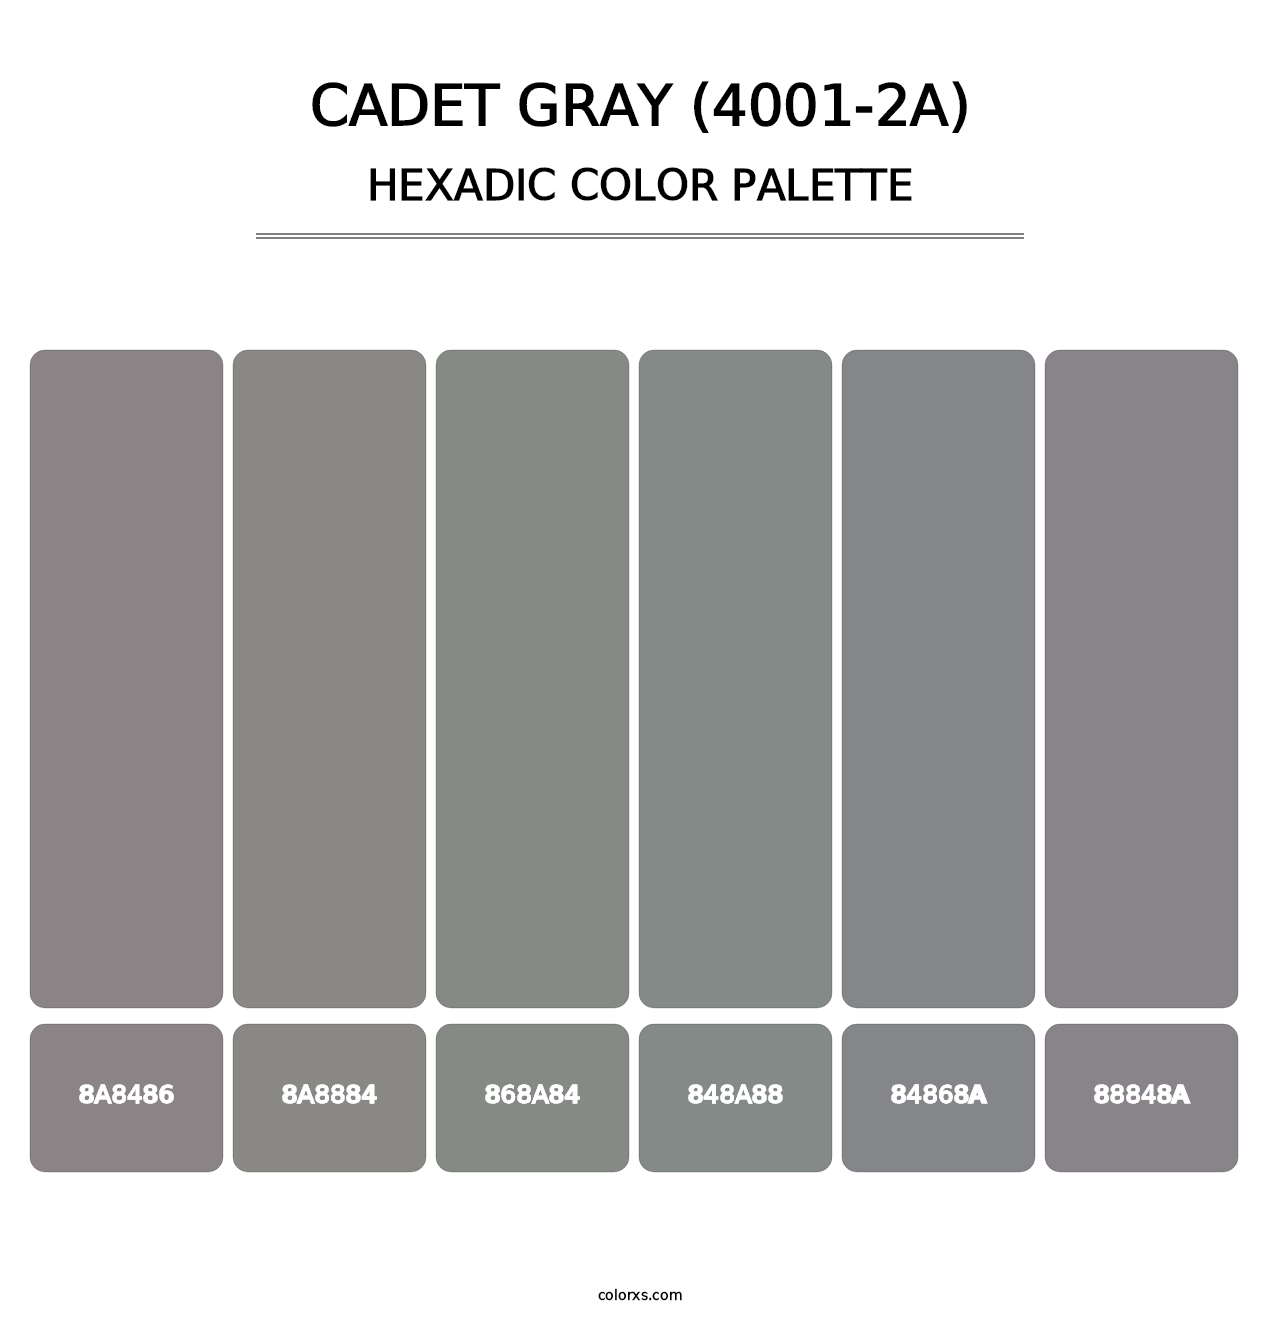 Cadet Gray (4001-2A) - Hexadic Color Palette